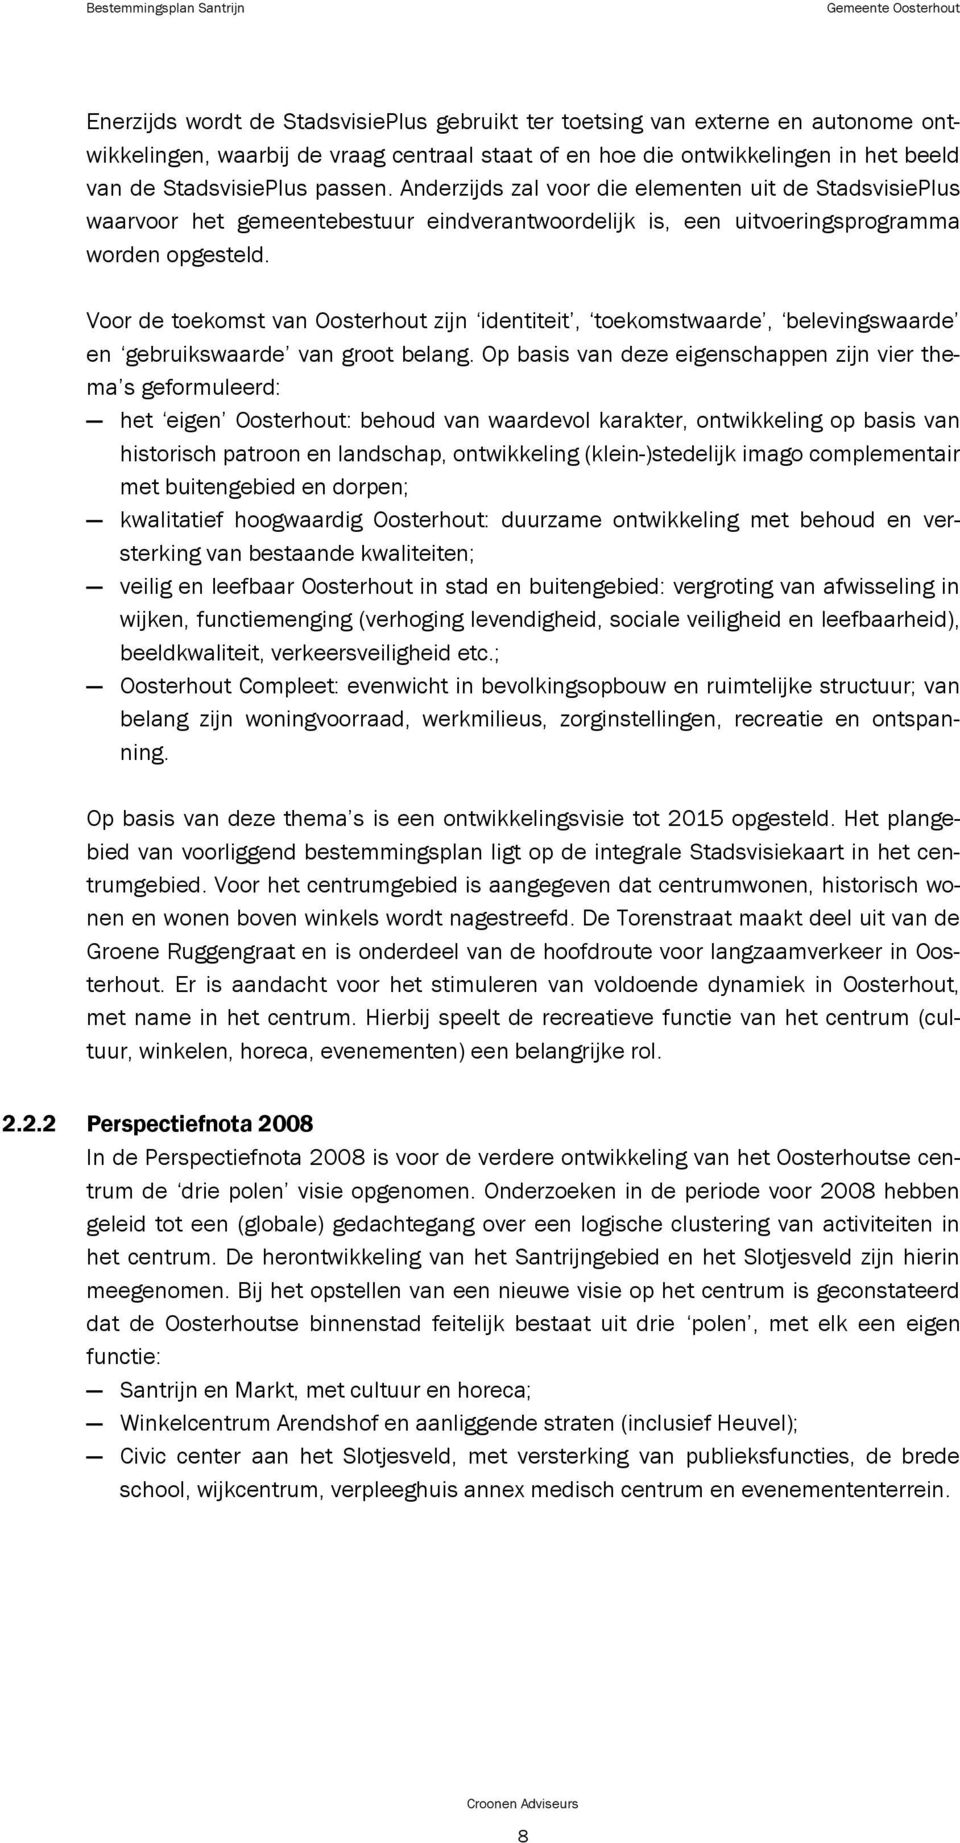 Voor de toekomst van Oosterhout zijn identiteit, toekomstwaarde, belevingswaarde en gebruikswaarde van groot belang.